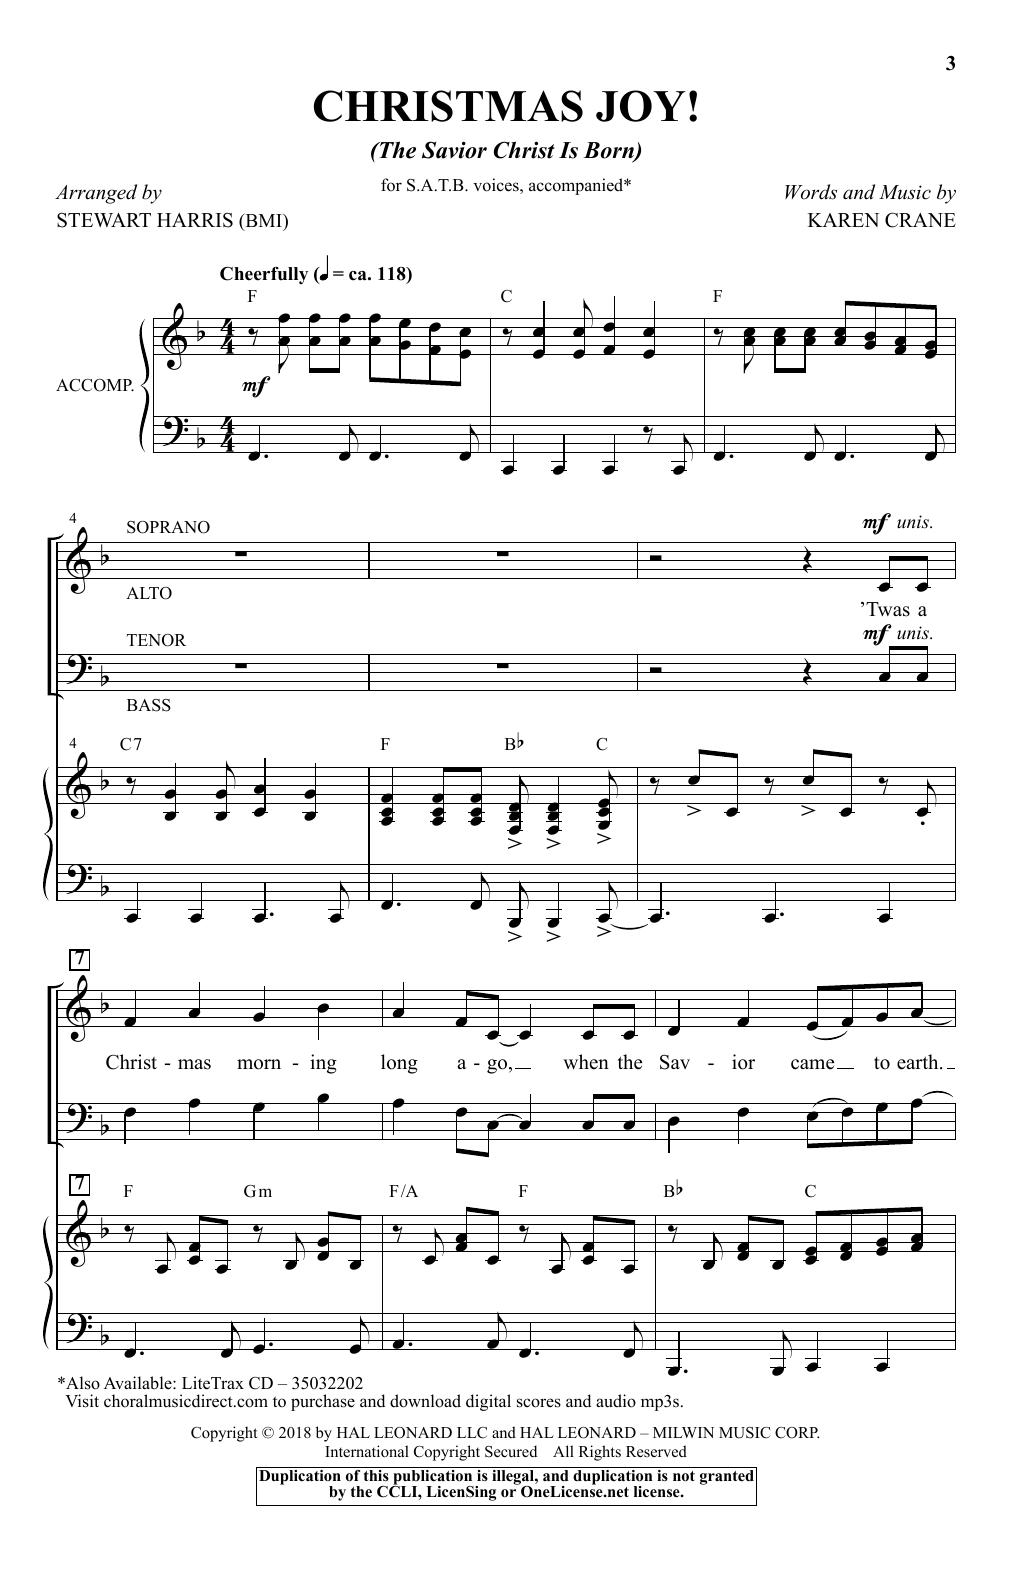 Karen Crane Christmas Joy! (The Savior Christ Is Born) (arr. Stewart Harris) sheet music notes and chords arranged for SATB Choir